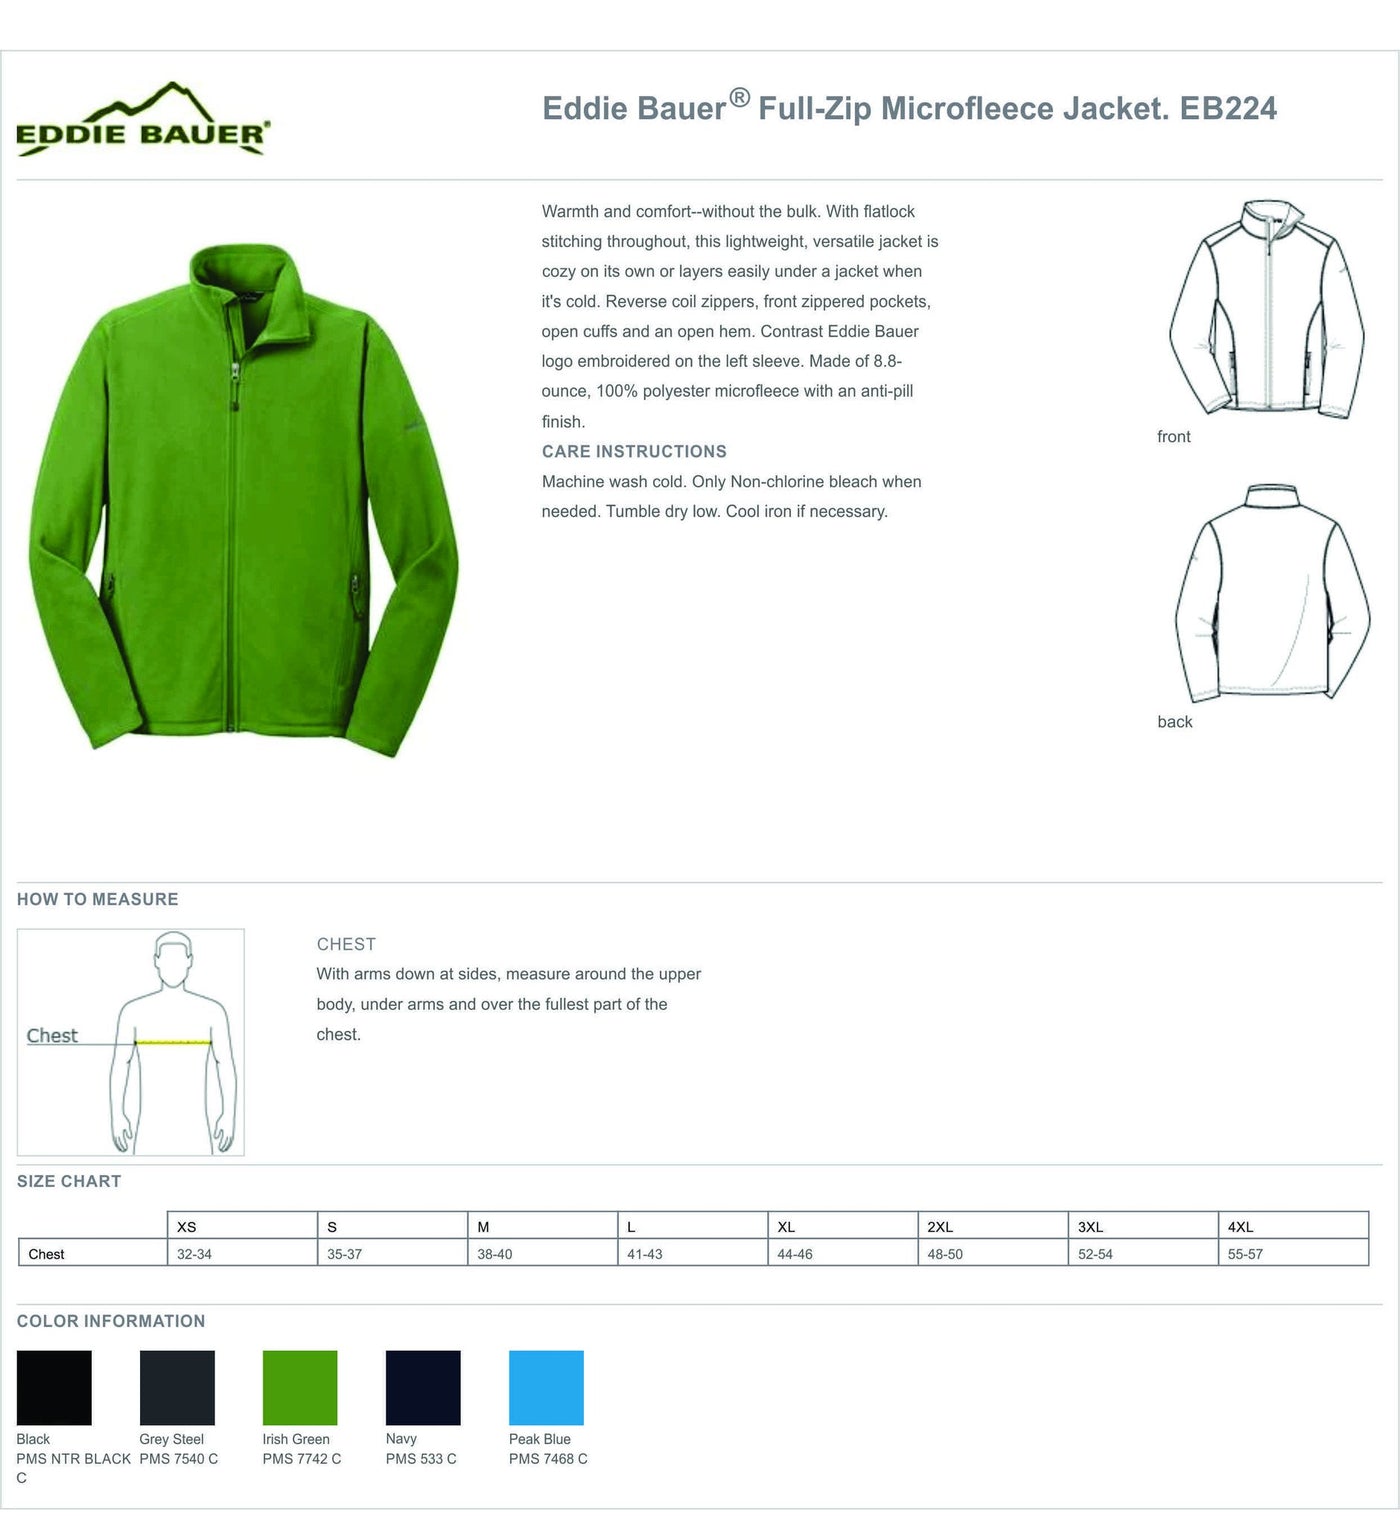 MIL EB224 Men's Eddie Bauer® Full-Zip Microfleece Jacket